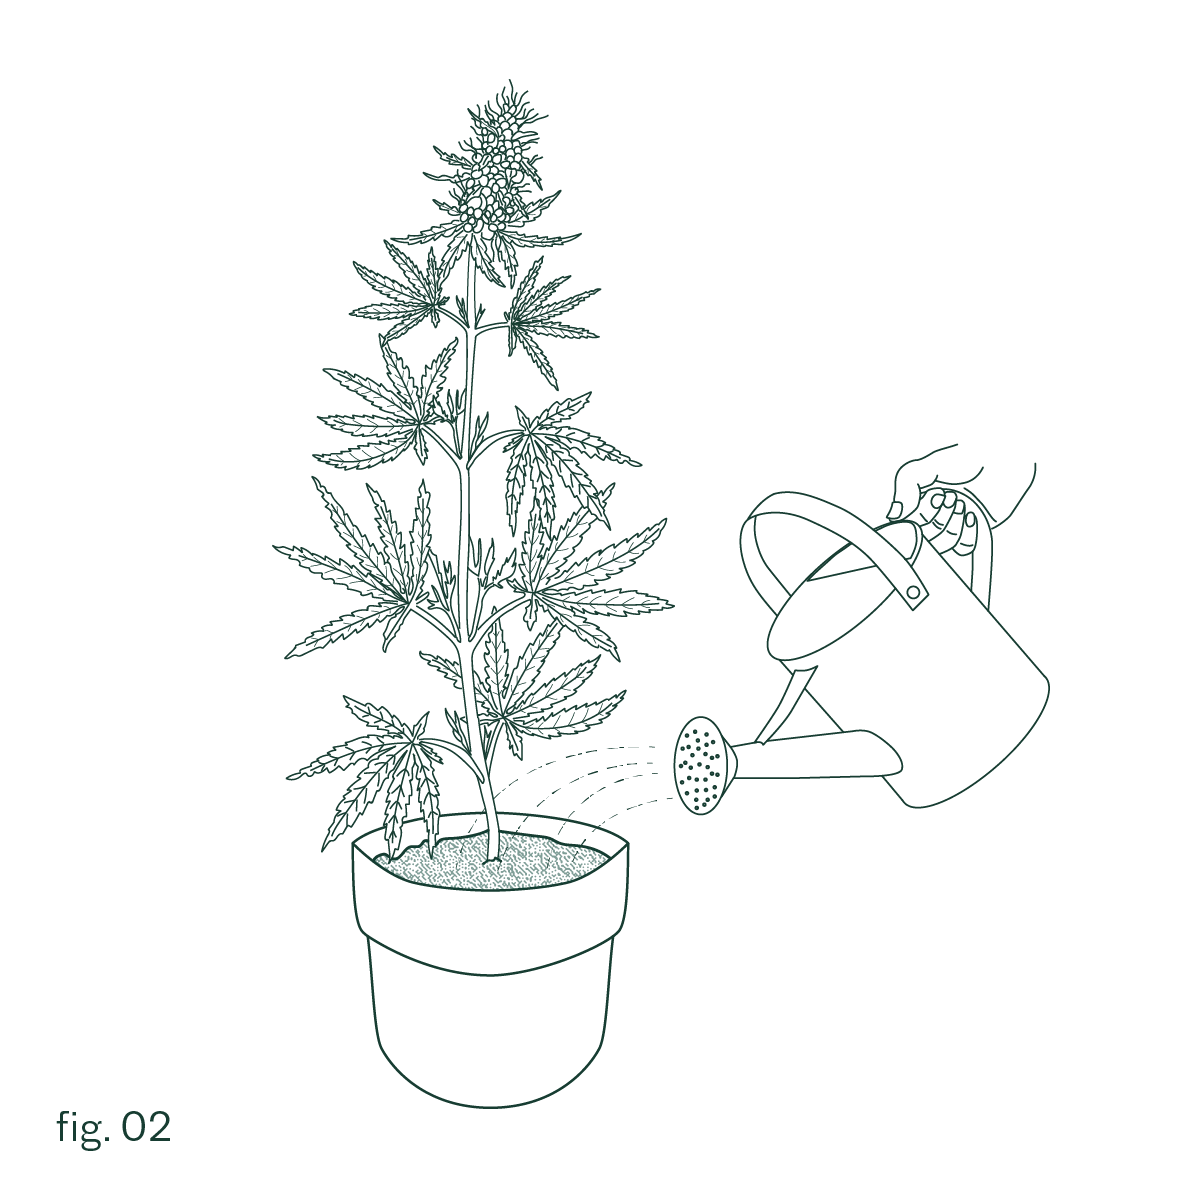 fig. 2 watering illustration